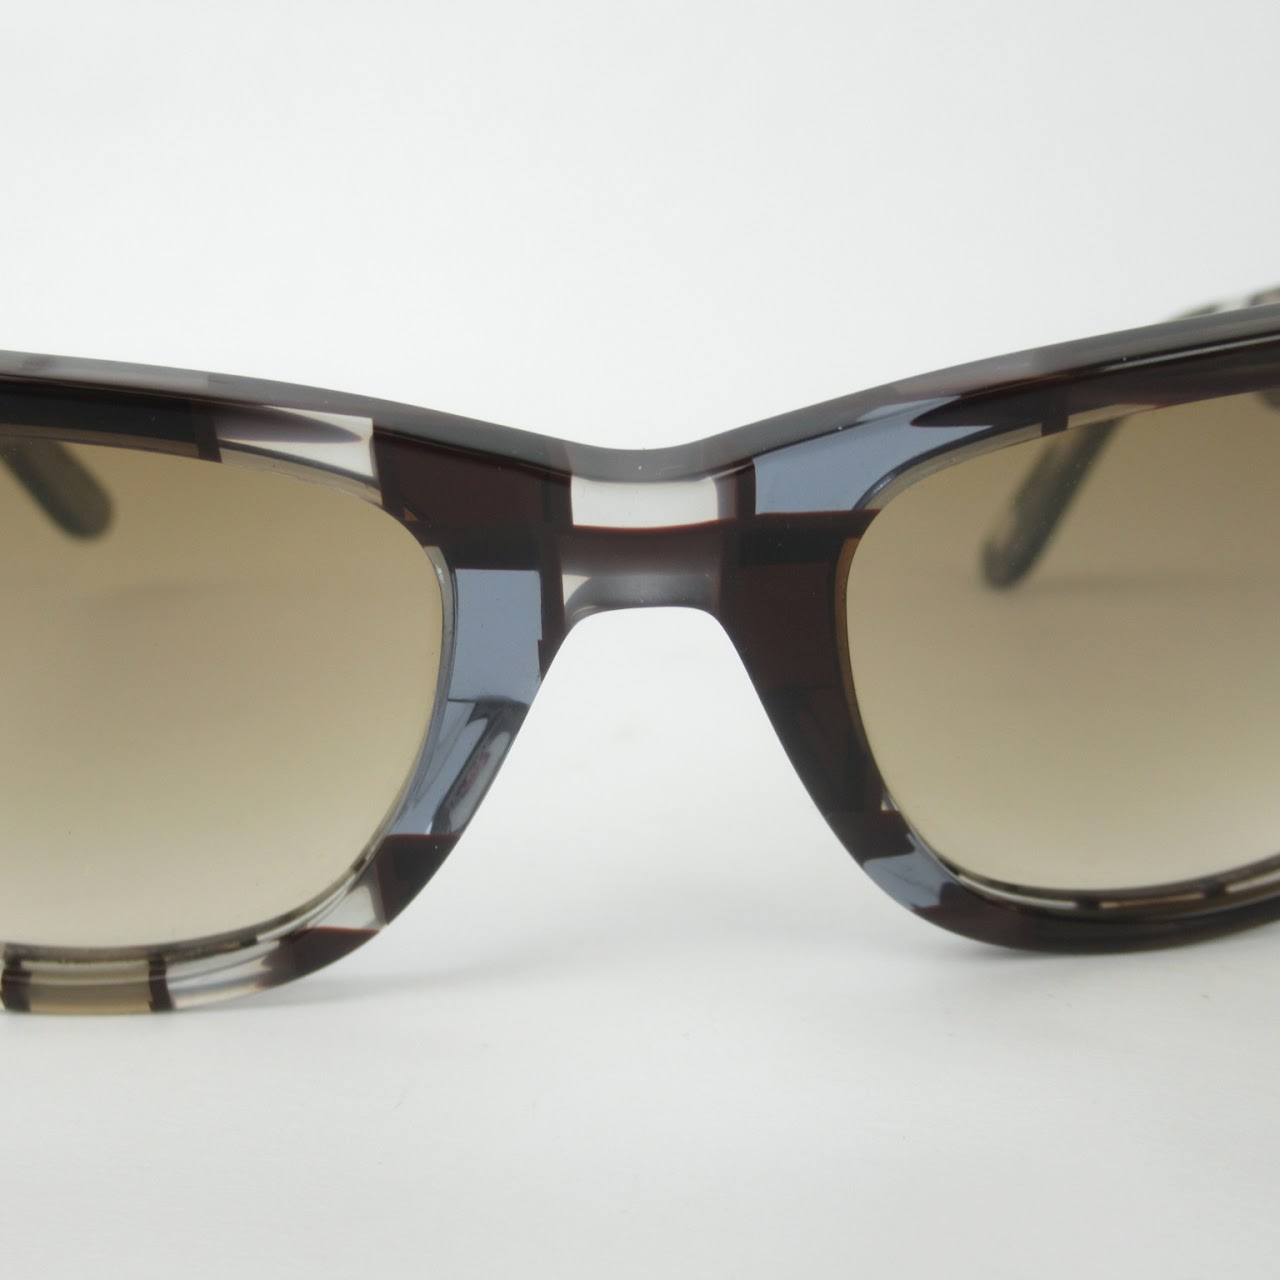 Ray-Ban Wayfair Special Edition #6 Sunglasses